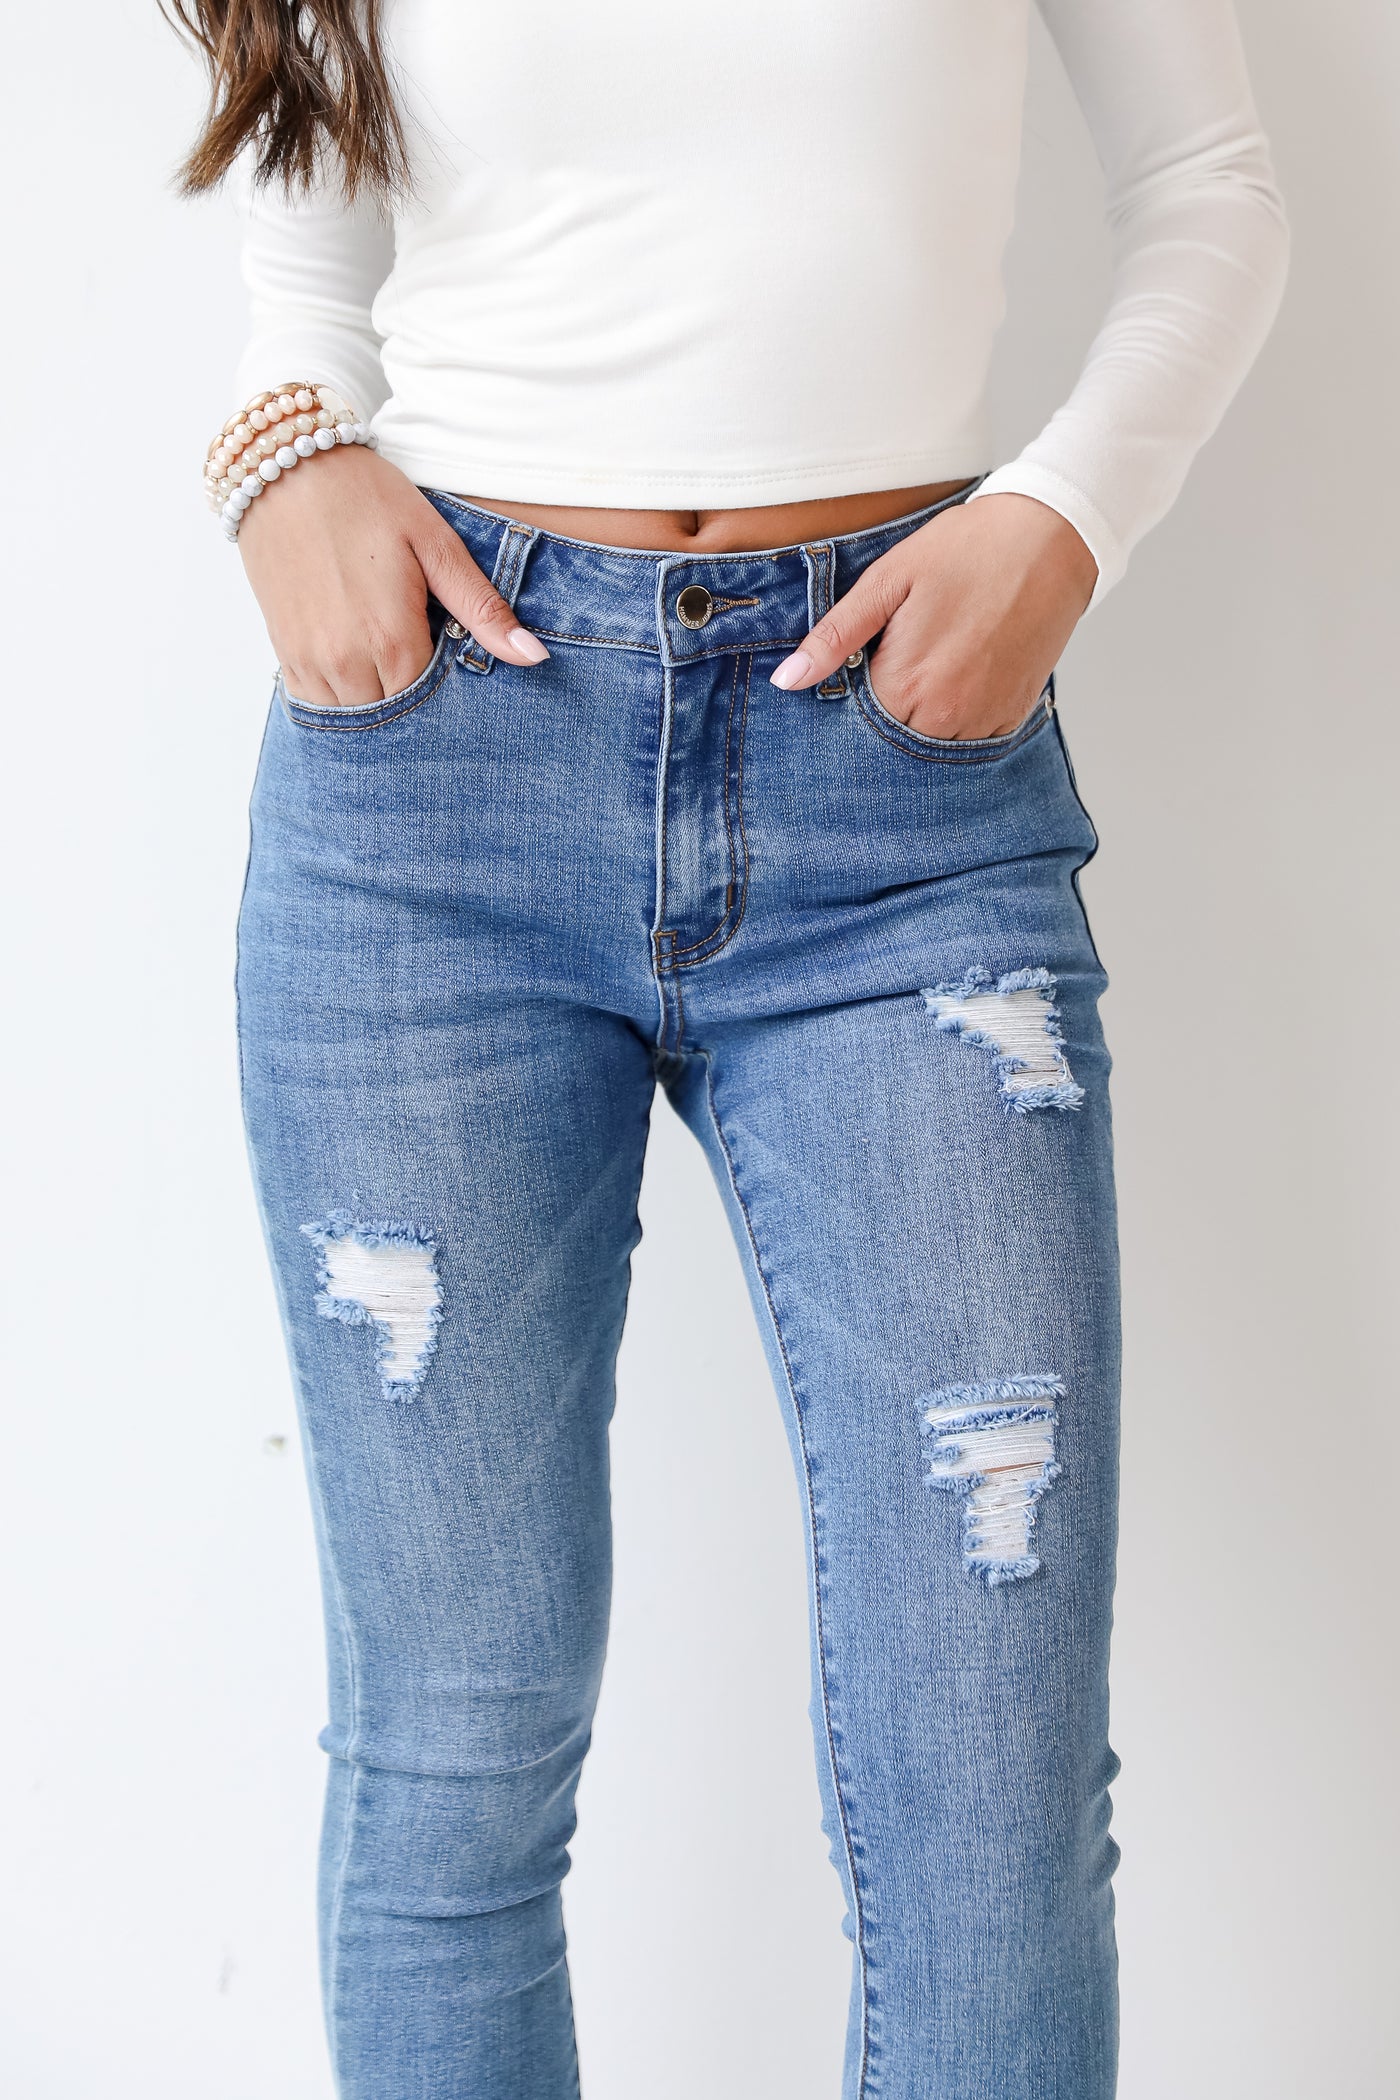 medium wash skinny jeans close up